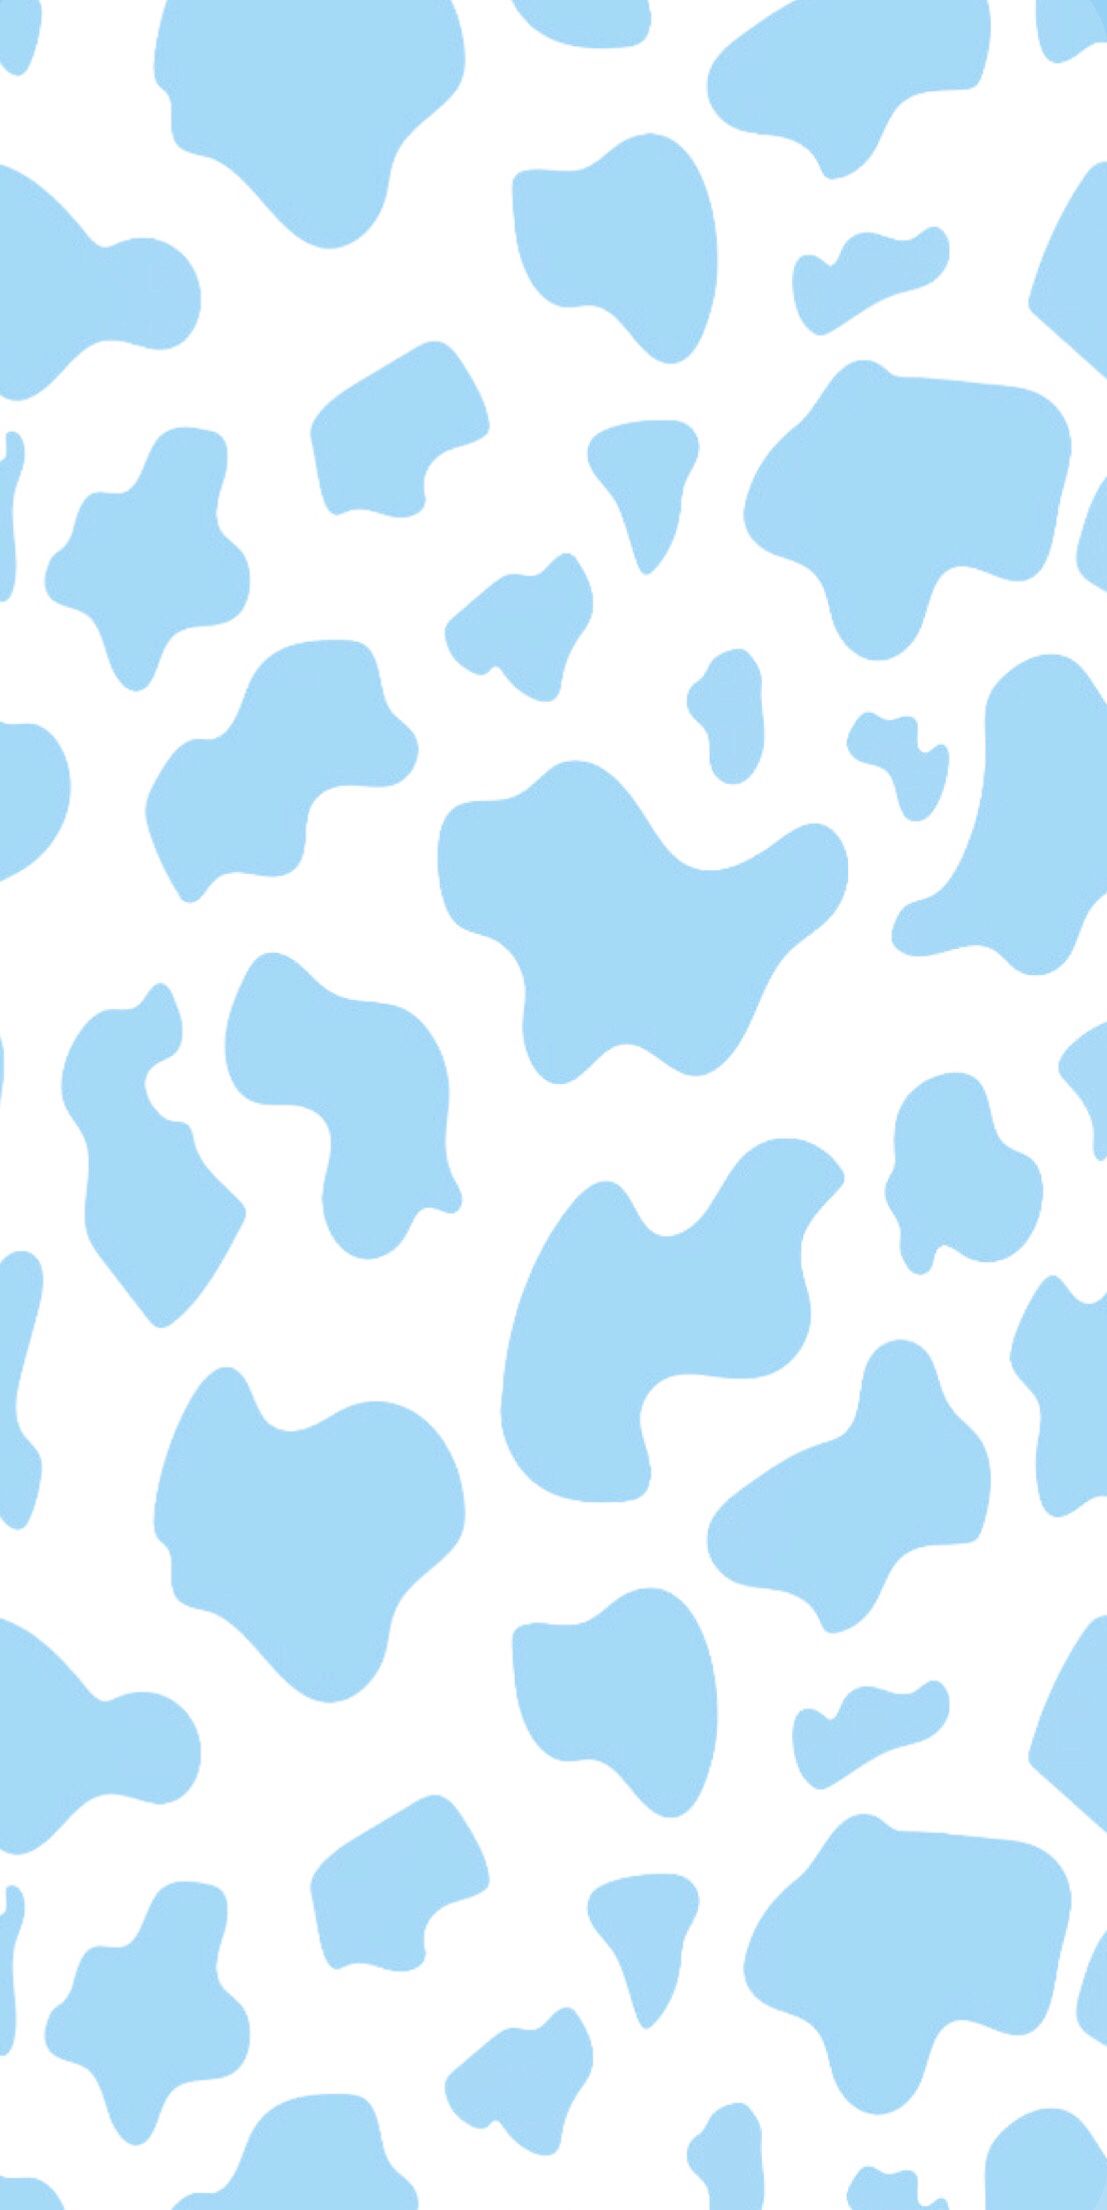 blue cow print wallpaper. Cow print wallpaper, Aesthetic iphone wallpaper, Cute patterns wallpaper